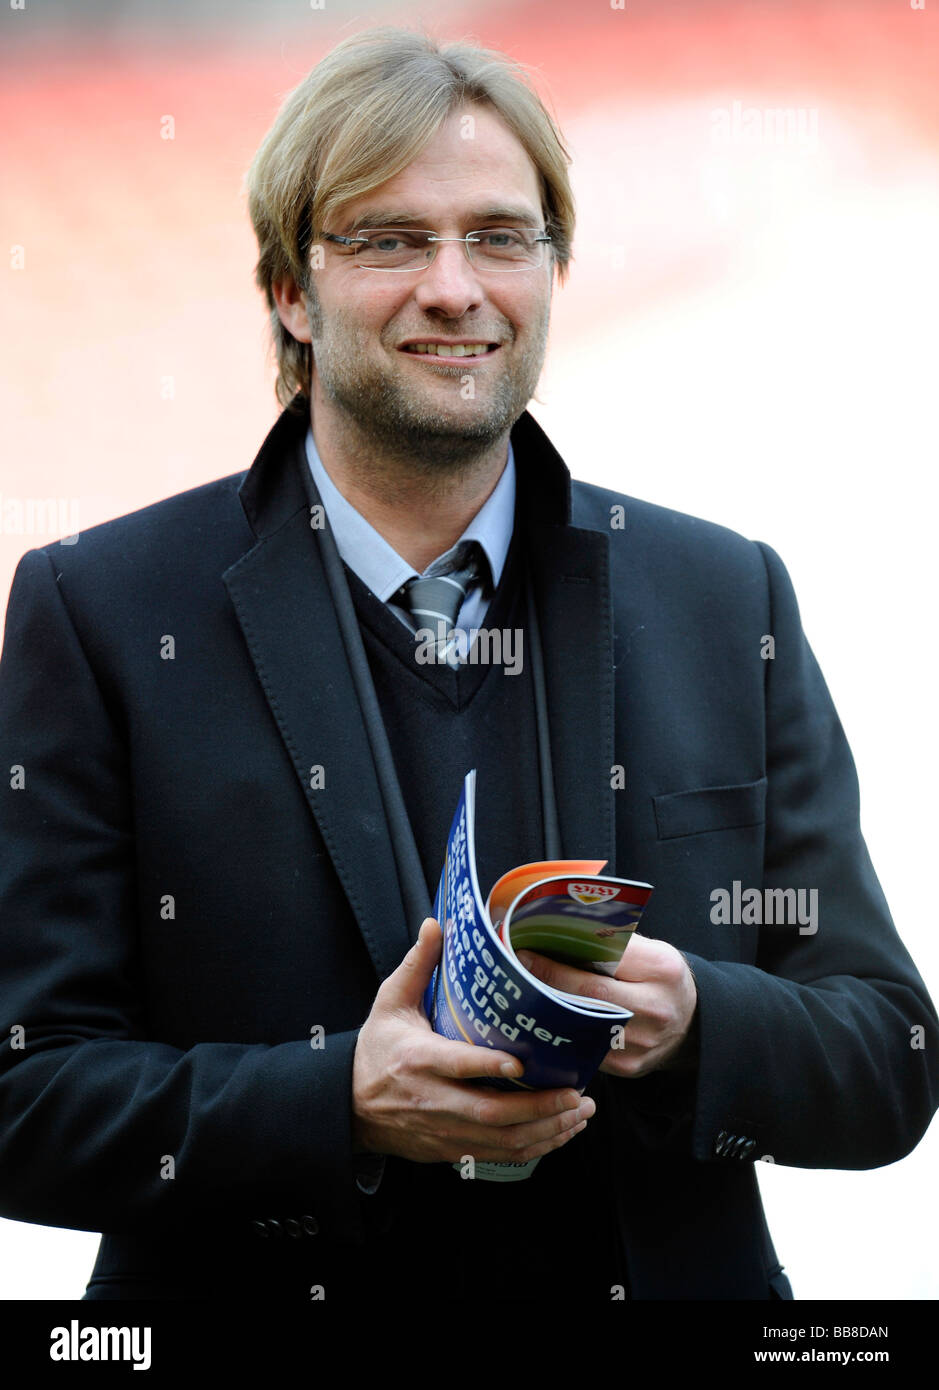 Juergen Klopp, coach of BVB Borussia Dortmund Stock Photo